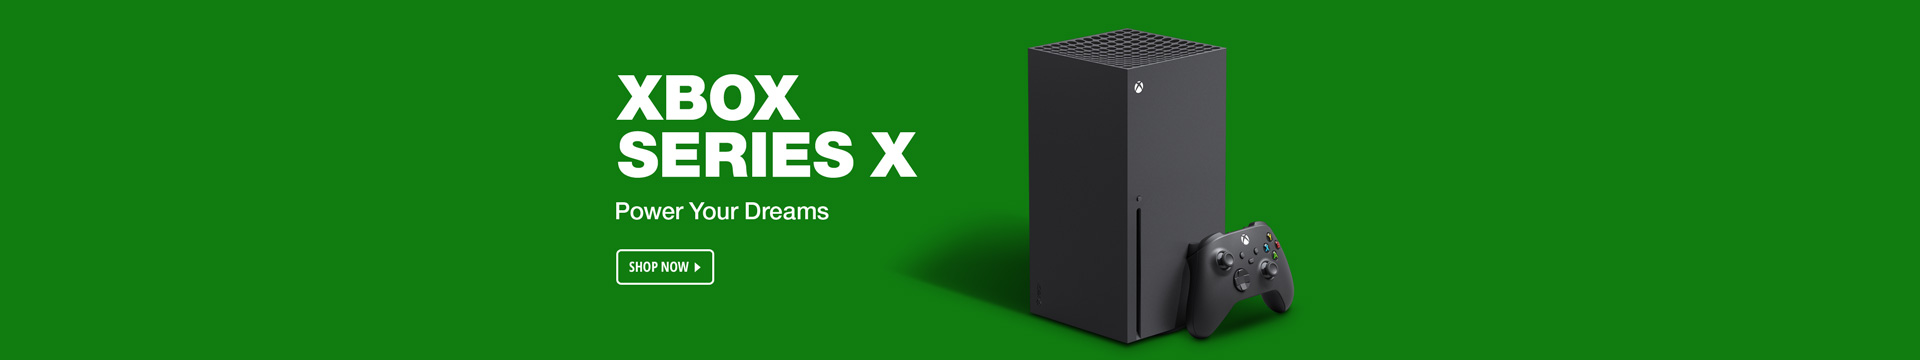 shop xbox series x